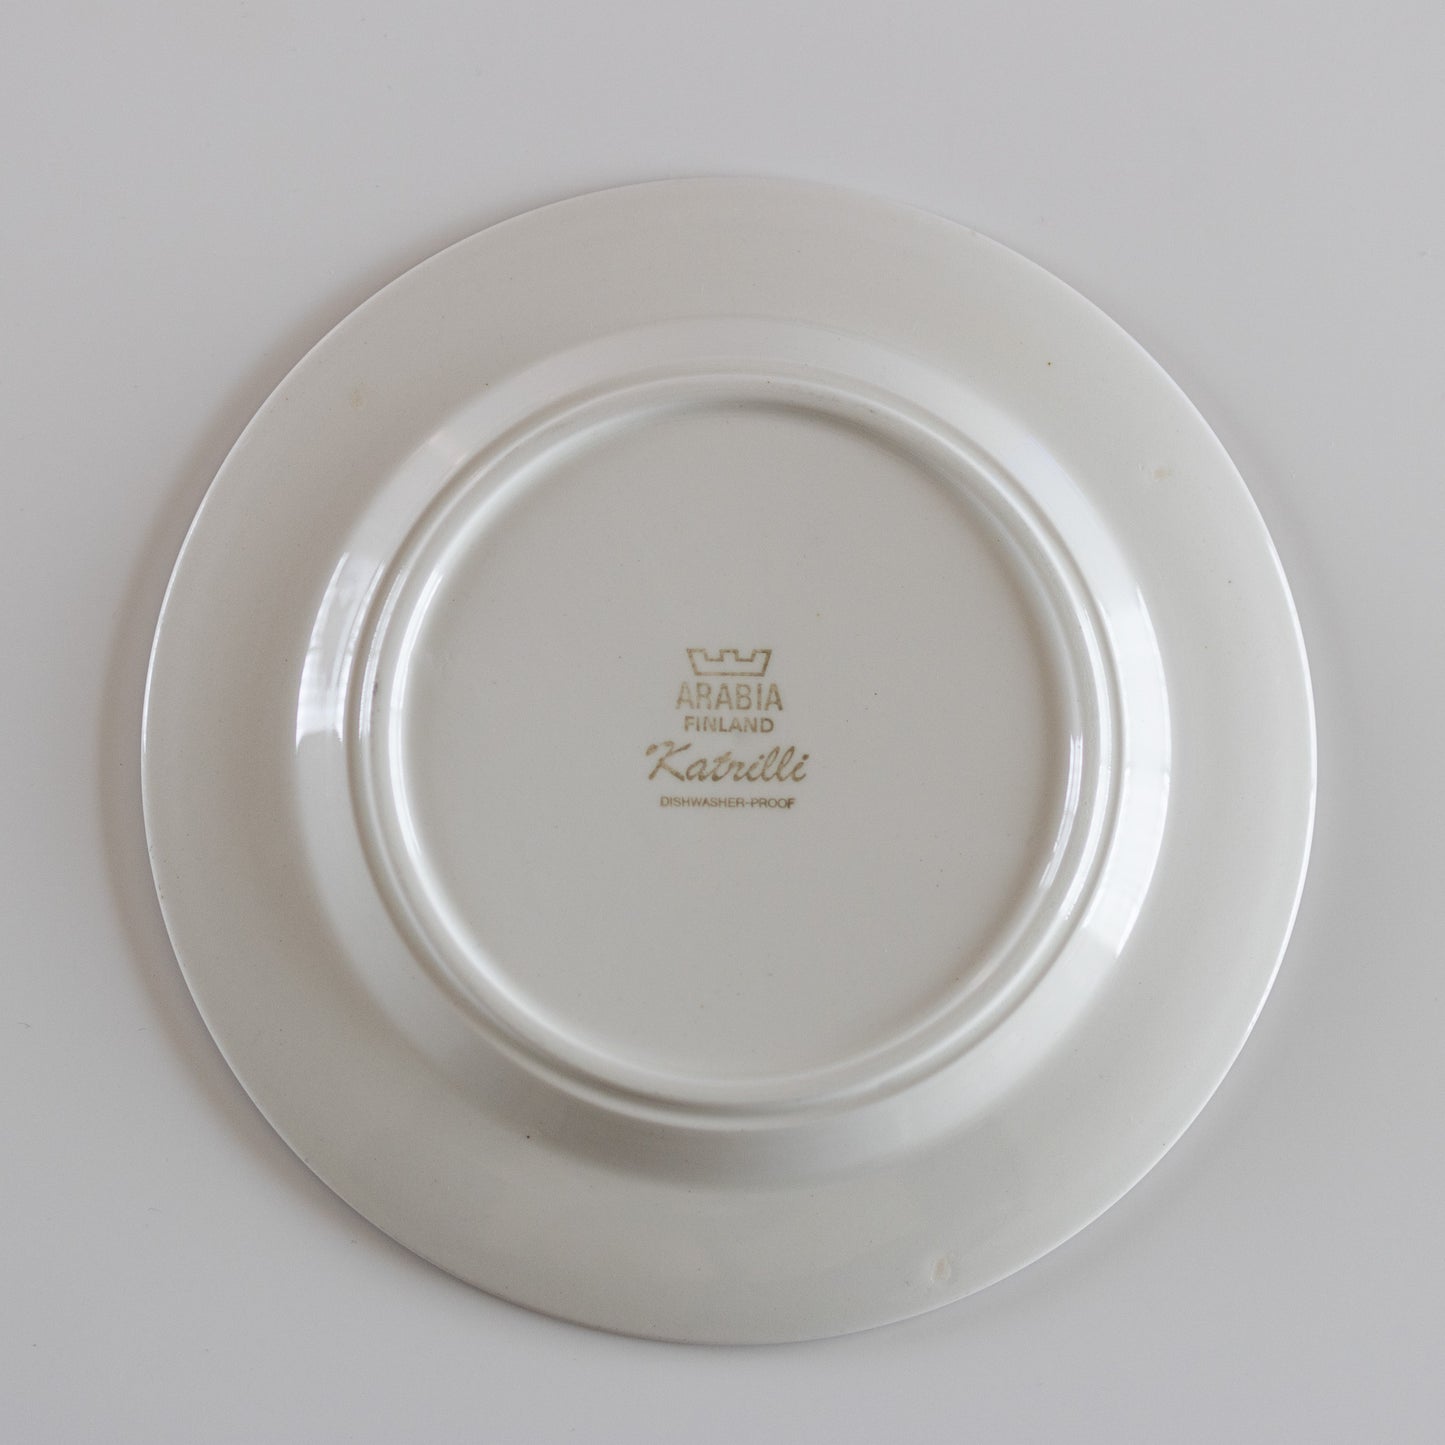 katrilli (カトリーリ) plate 20.0cm / arabia (アラビア)